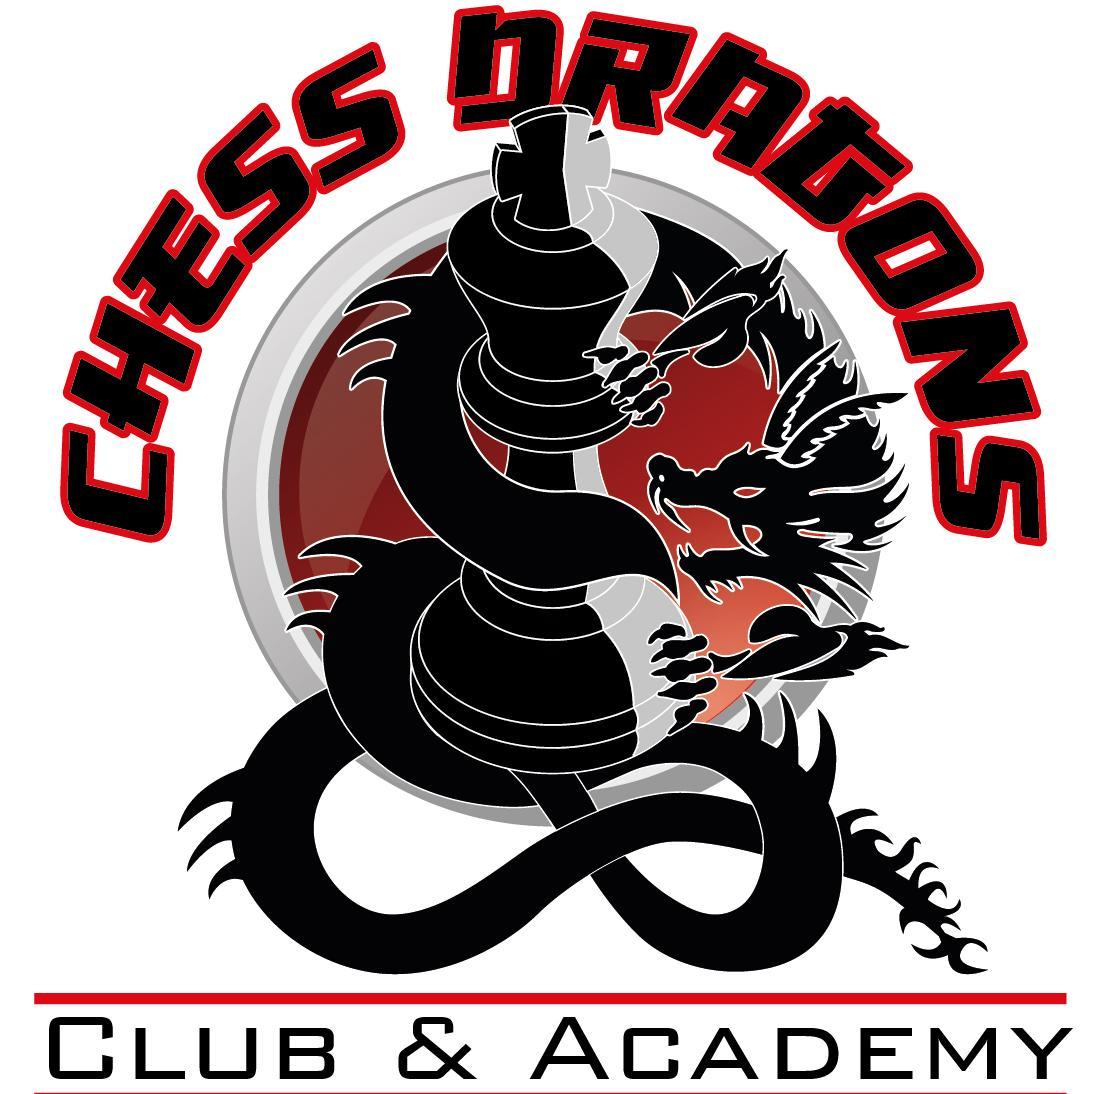 🐲El Club de Ajedrez #1 🥇🏆 de Querétaro MX🐲
#TodosSomosChessDragons
#FamiliaDragon
#DragonesTorneando
#TeamChessDragons
#LoveForChess
#ChessForLife